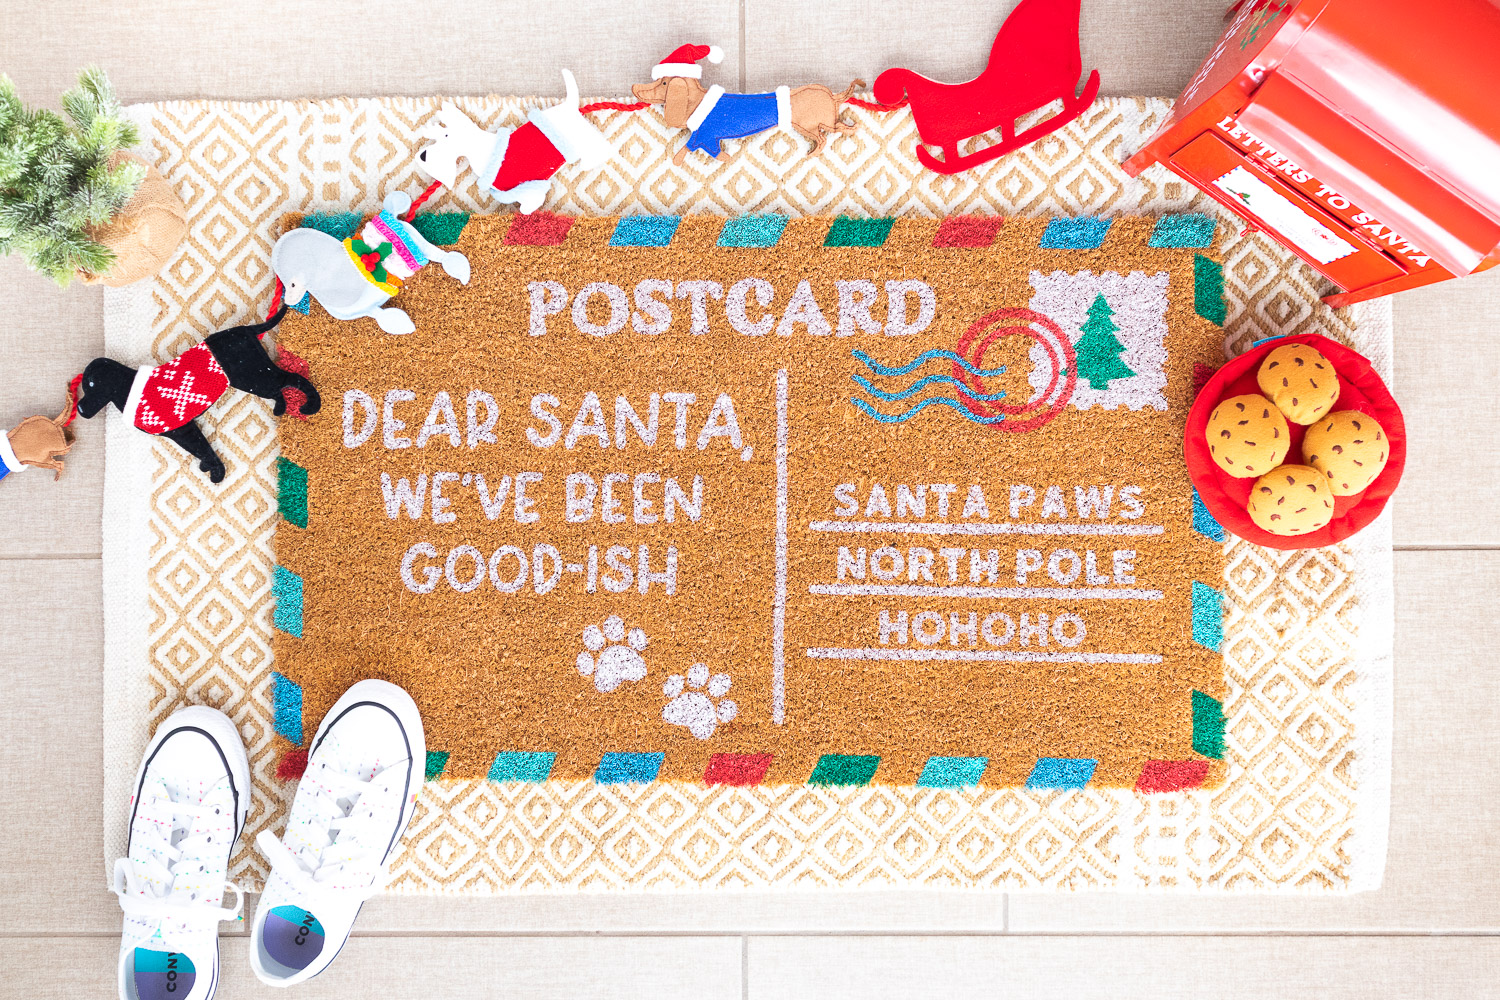 Handmade Christmas postcard doormat. The left side says "Dear Santa, We've been good-ish". The right side says "Santa Paws, North Pole, Hohoho".